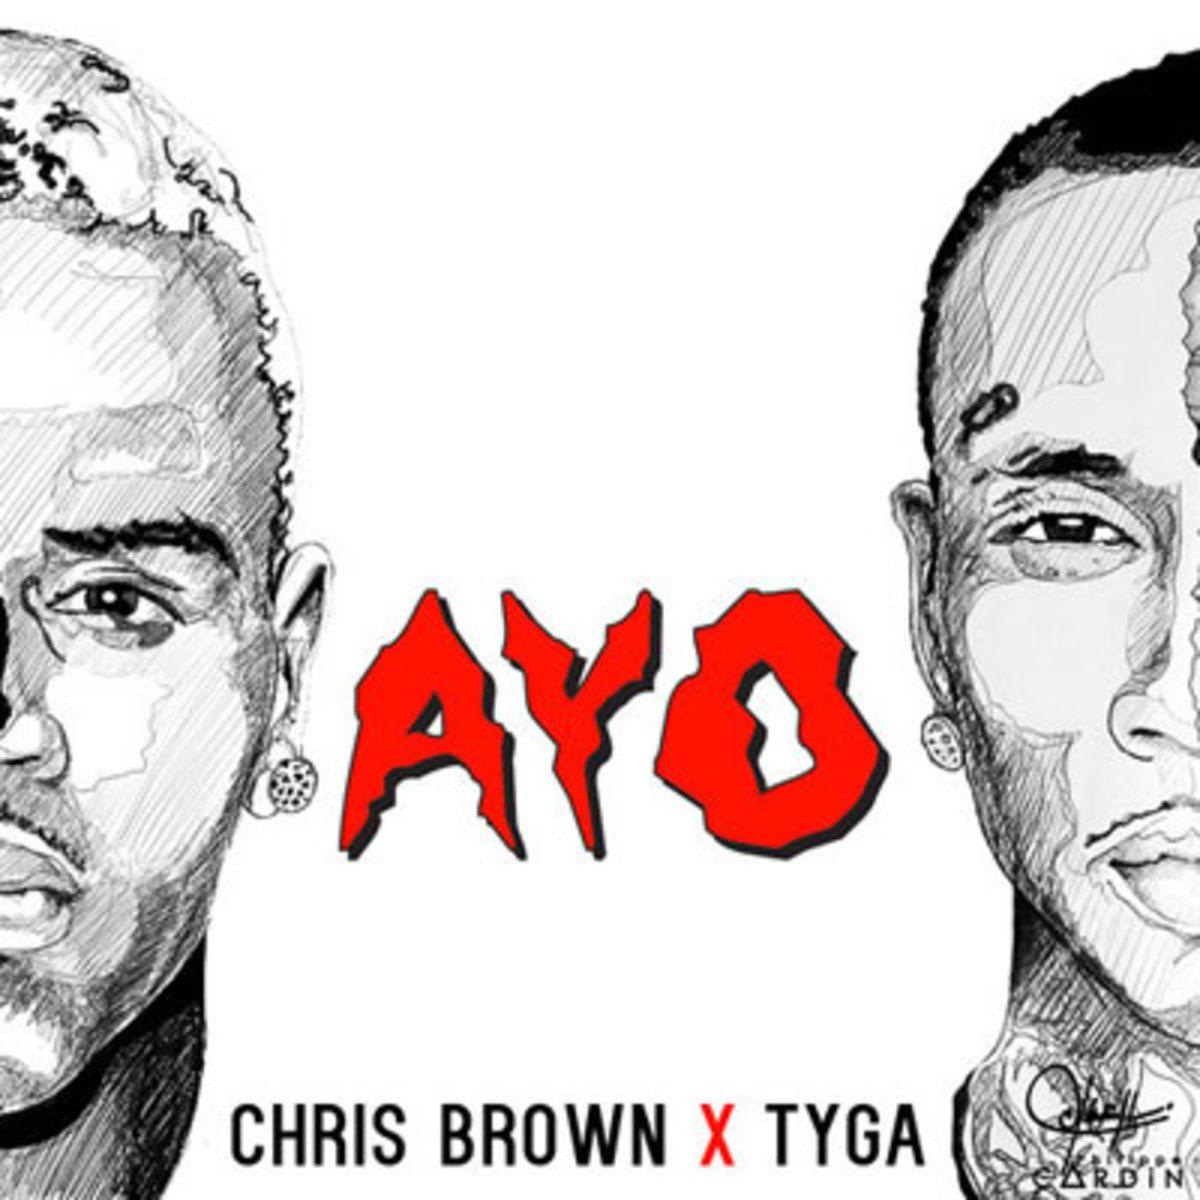 Chris Brown X Logo - Chris Brown x Tyga